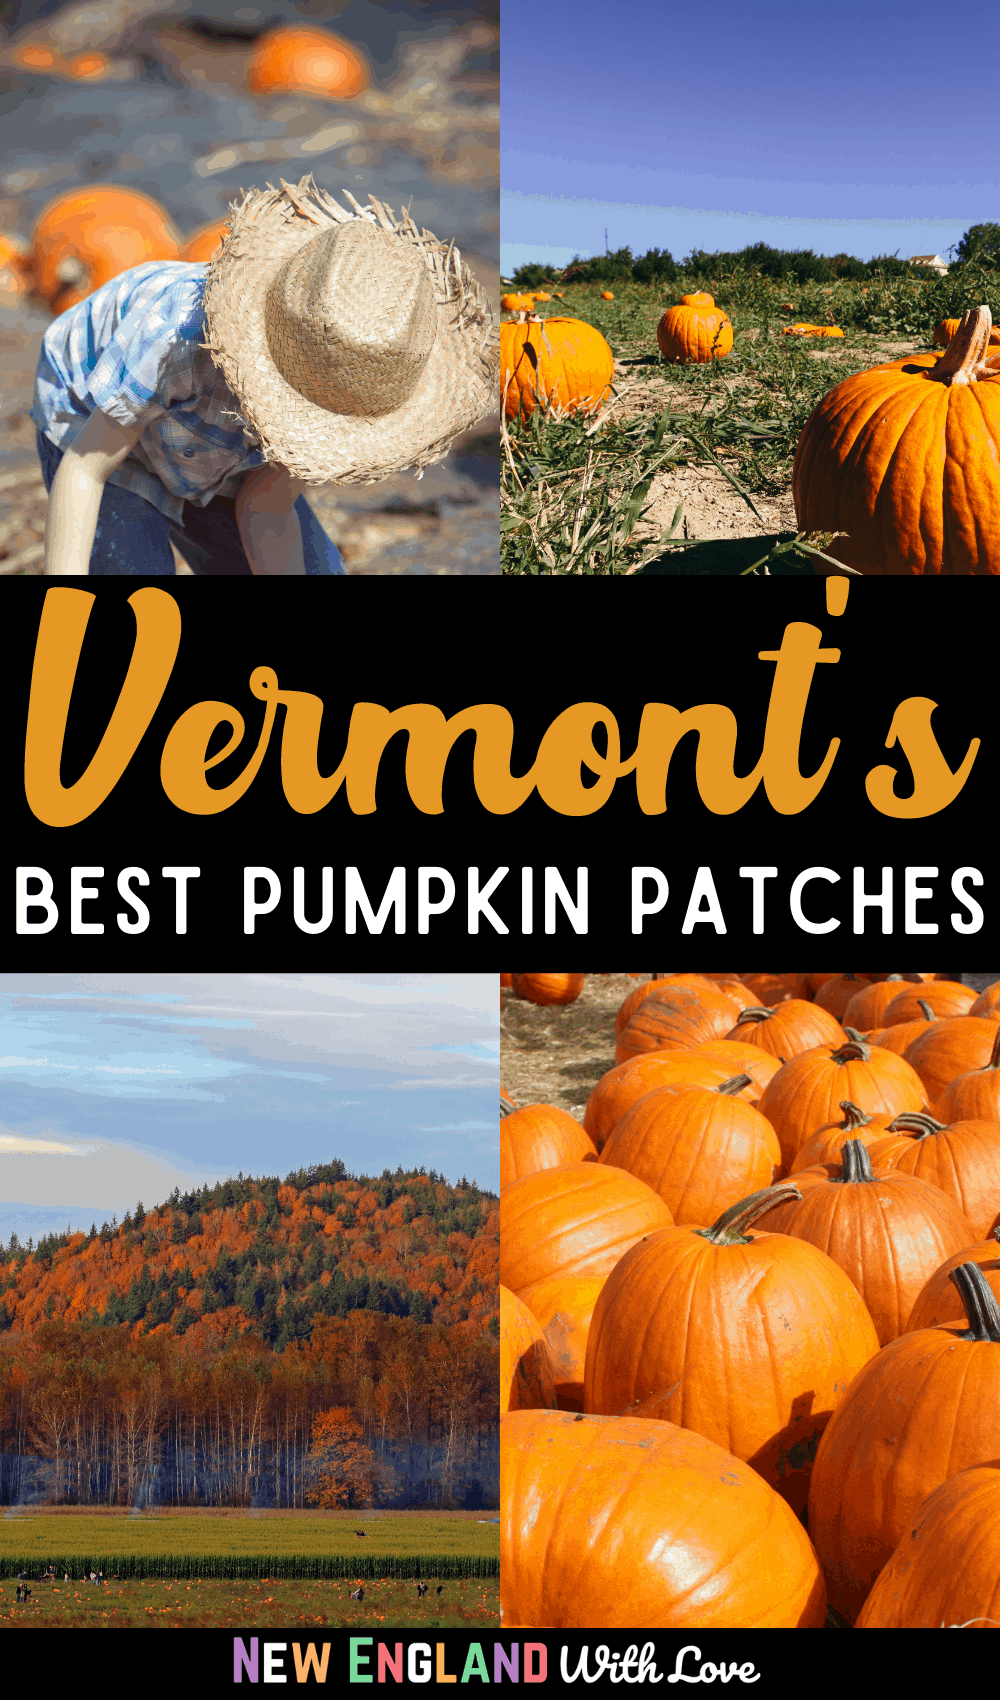 Pinterest graphic reading "Vermont's Best Pumpkin Patches"